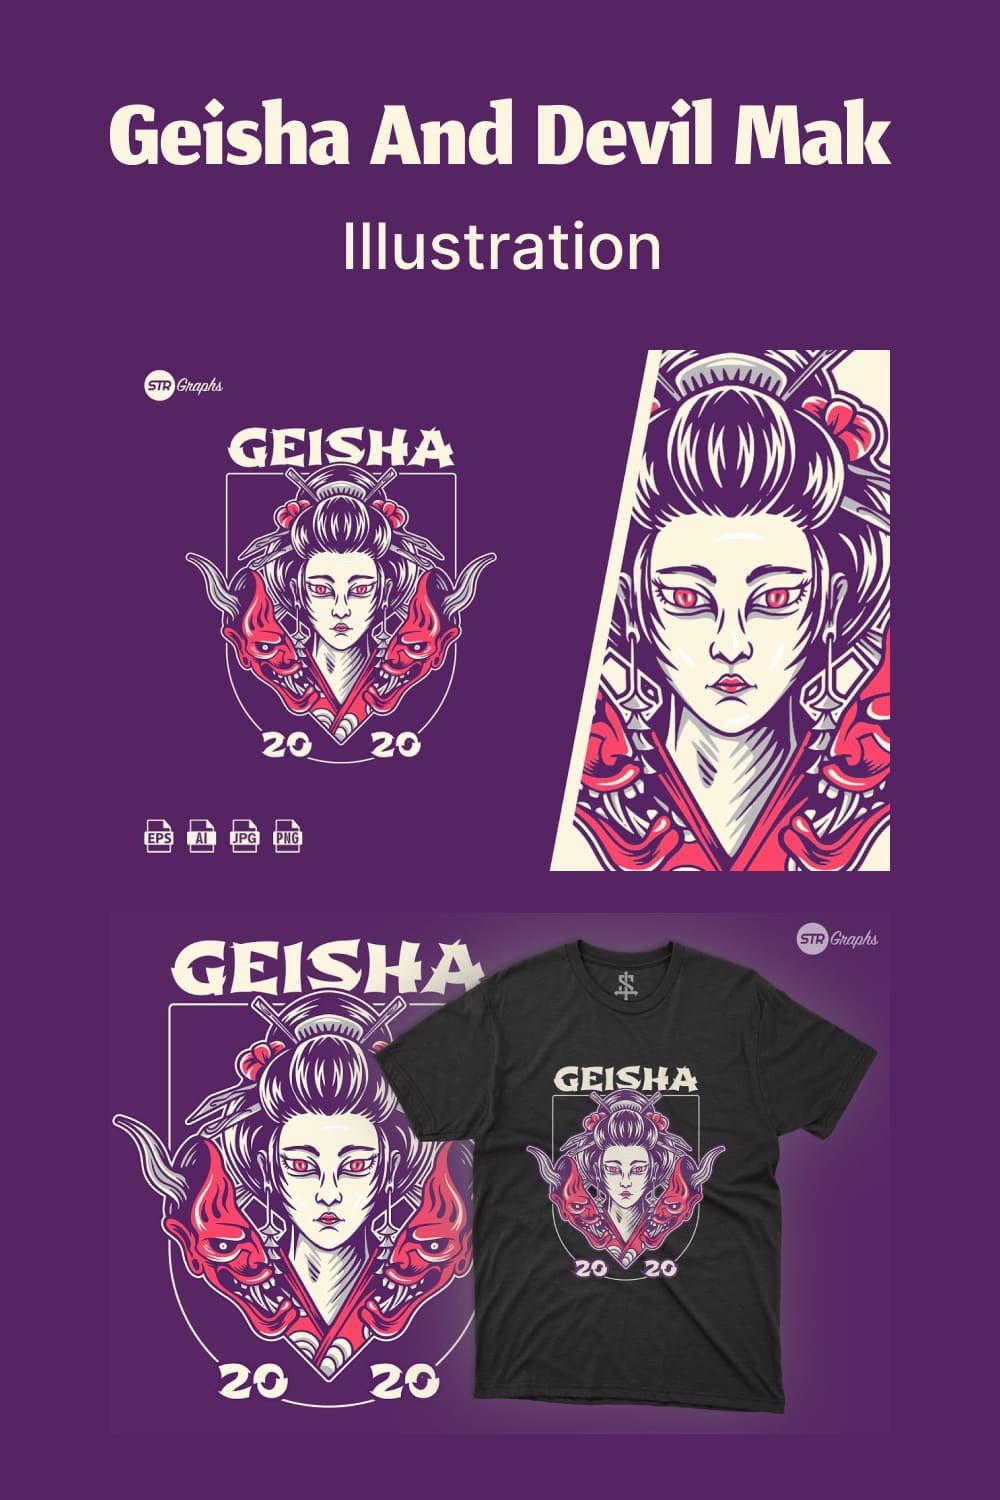 Geisha And Devil Mak - Illustration - Pinterest.